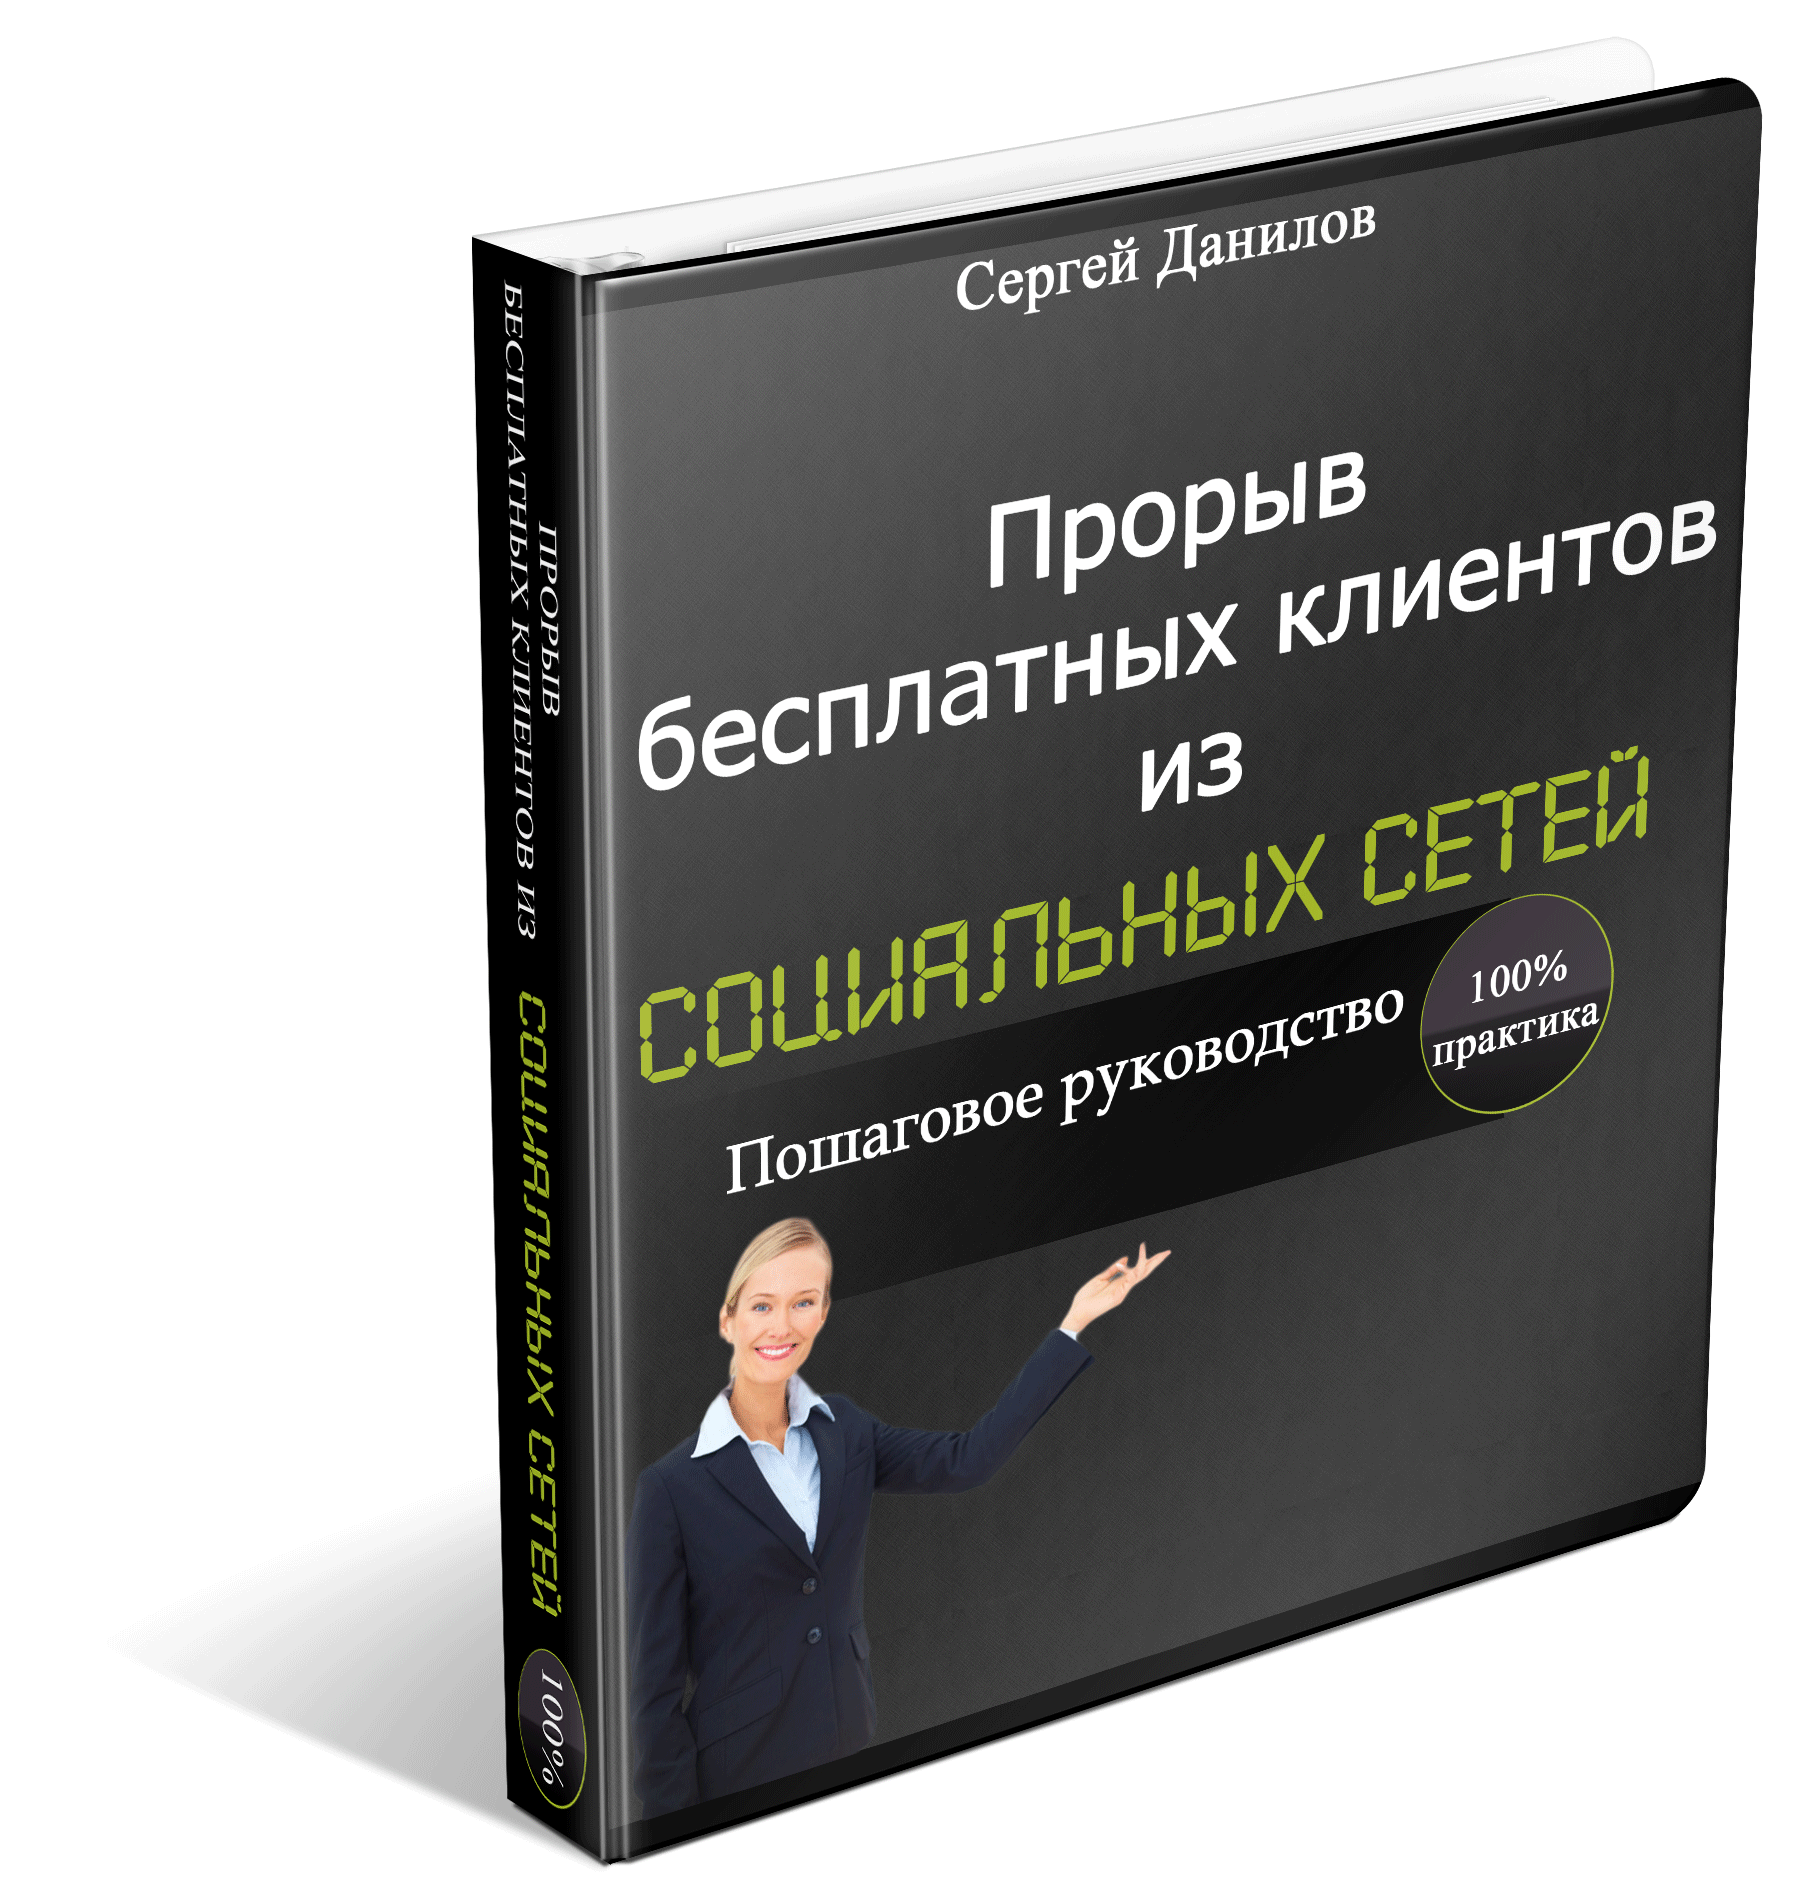 https://glopart.ru/uploads/images/173583/3fadf7af518048fab074eba521b57abc.png